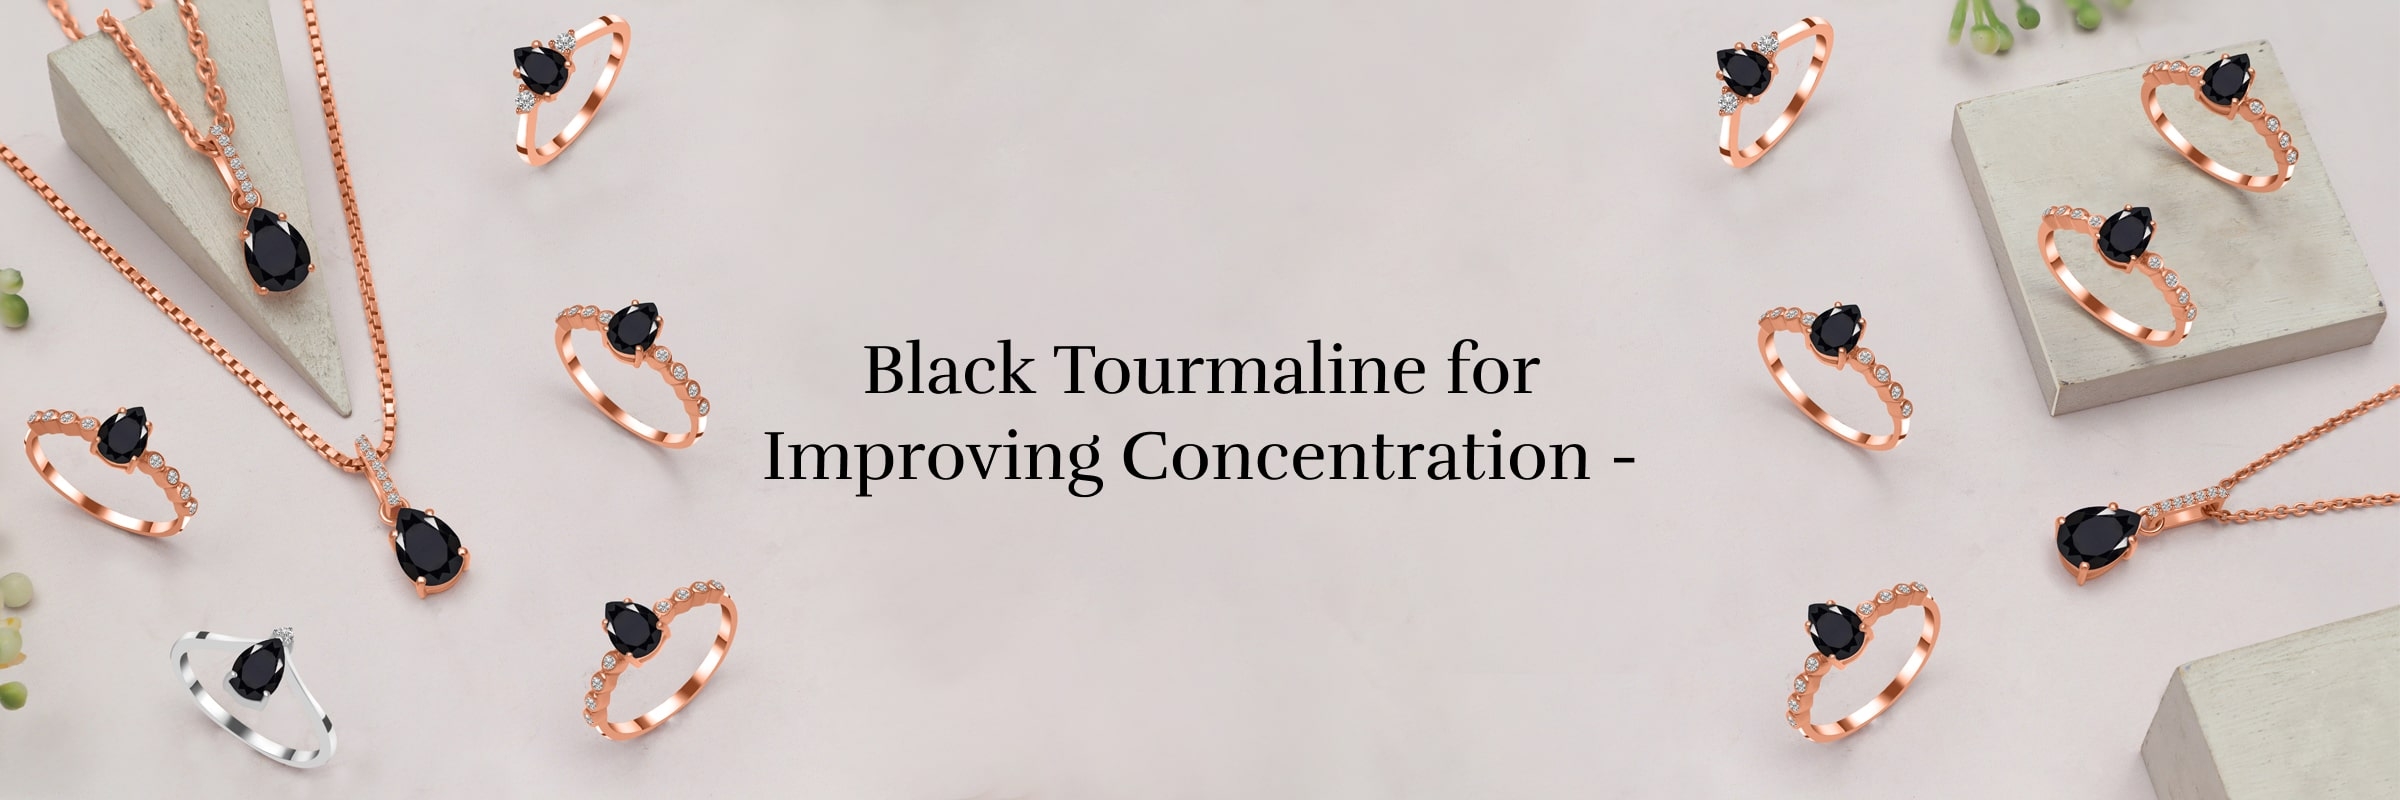 Black Tourmaline for Improving Concentration